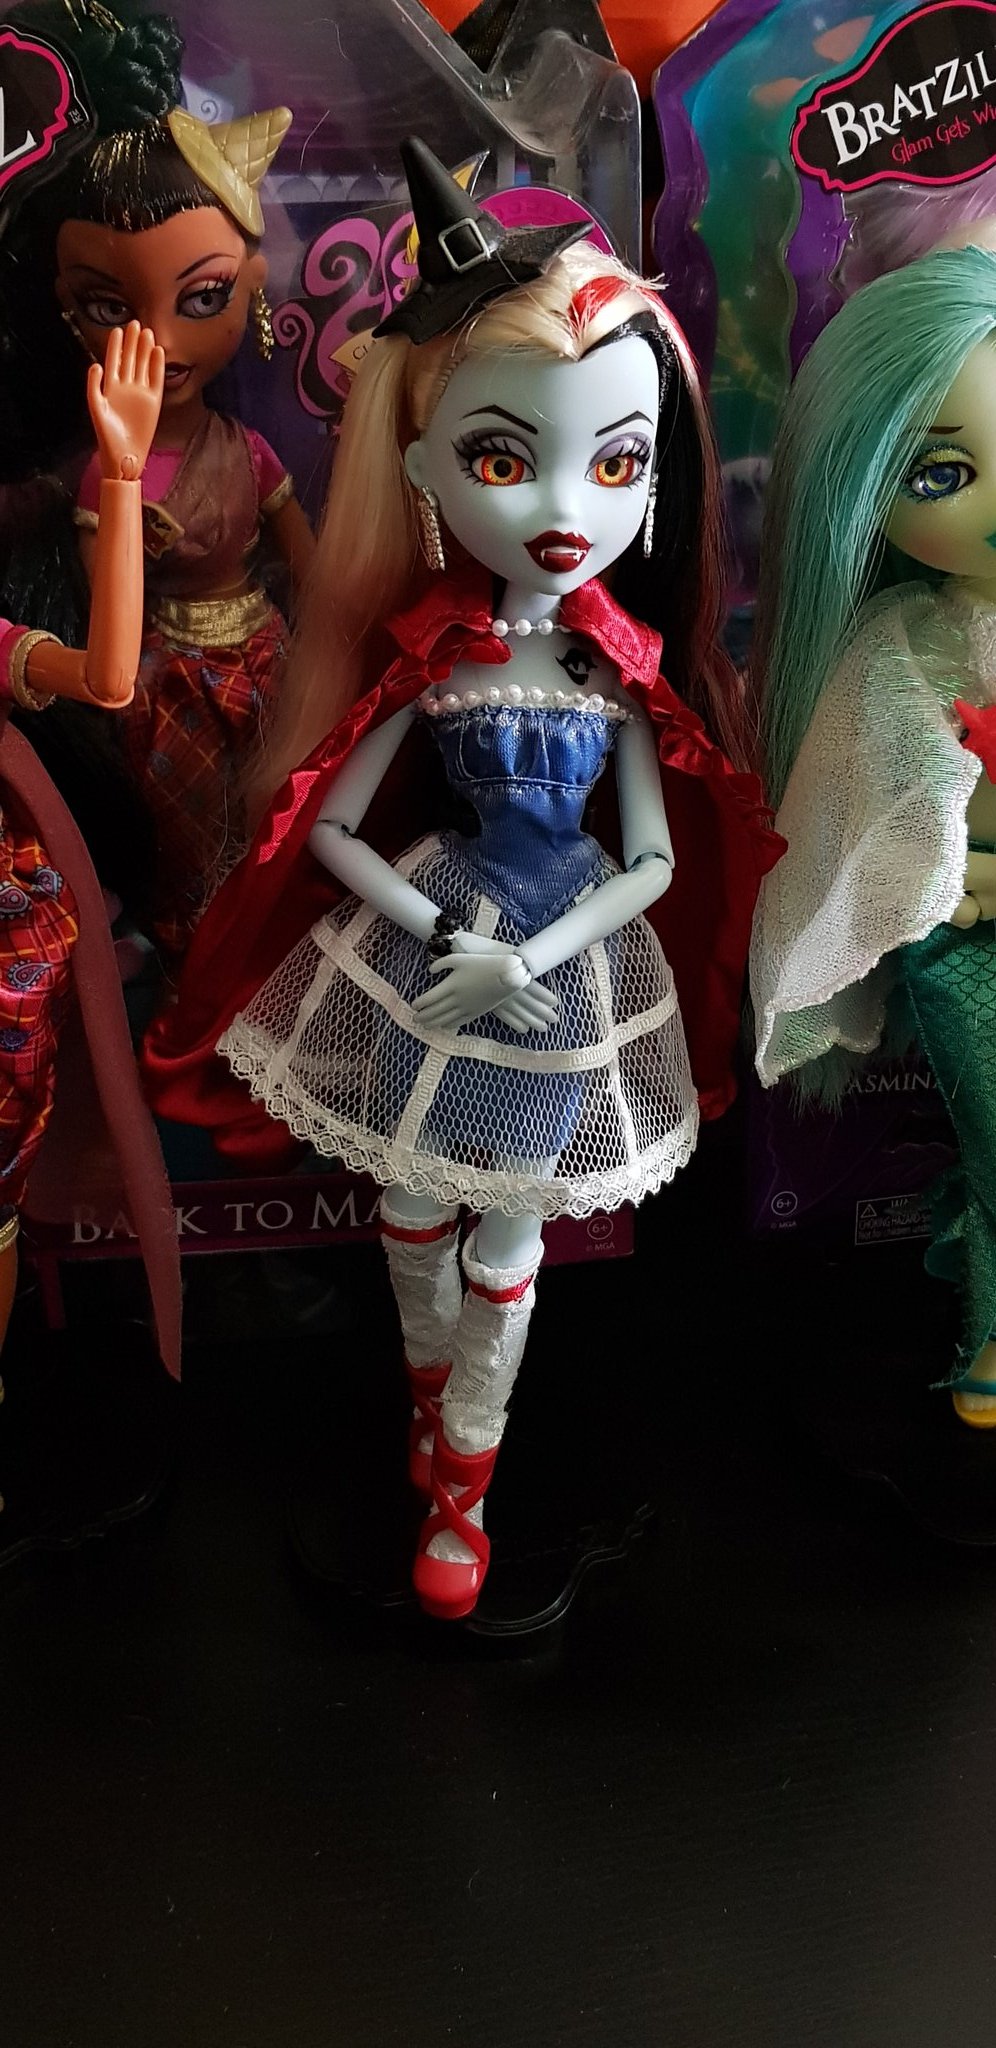 ❄Sarvina Valentine❄ on X: One of my most prized and rarer dolls, Vampelina.  #mystuff #Bratzillaz  / X